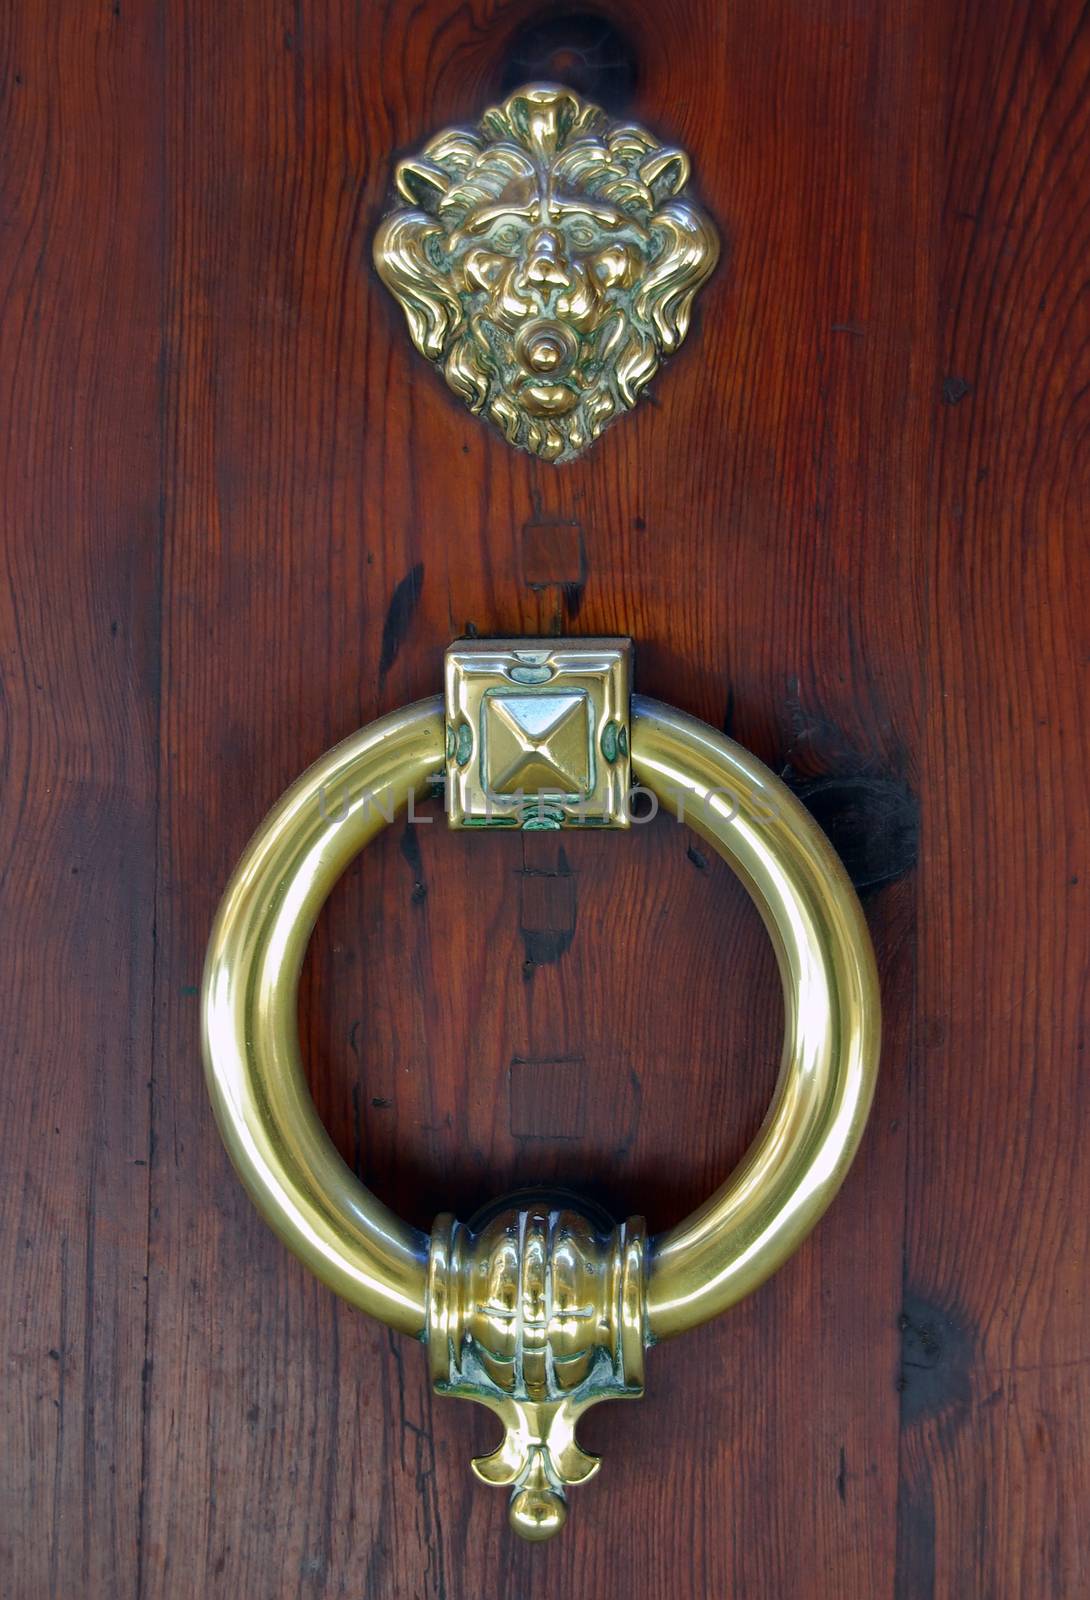 Classical doorknob in a door of a house in Palma de Mallorca (Spain)